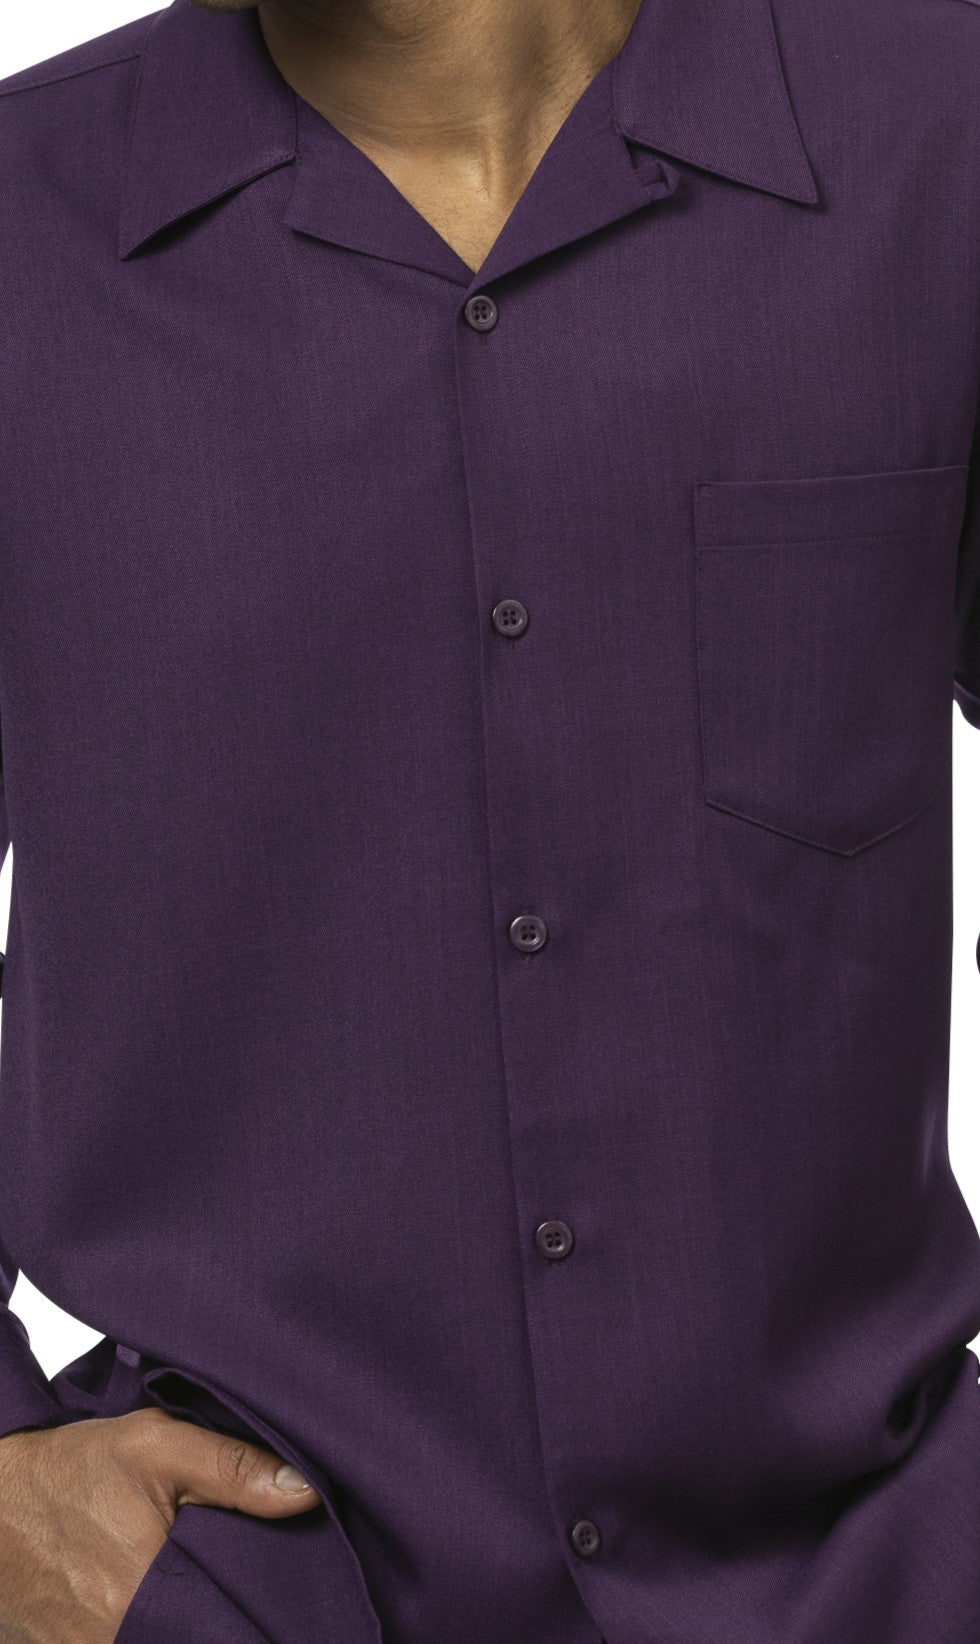 Black Berry's Premium Rich Cotton Solid Varsity jacket, M/S/L/Xl/Xxl at Rs  1250/piece in Delhi